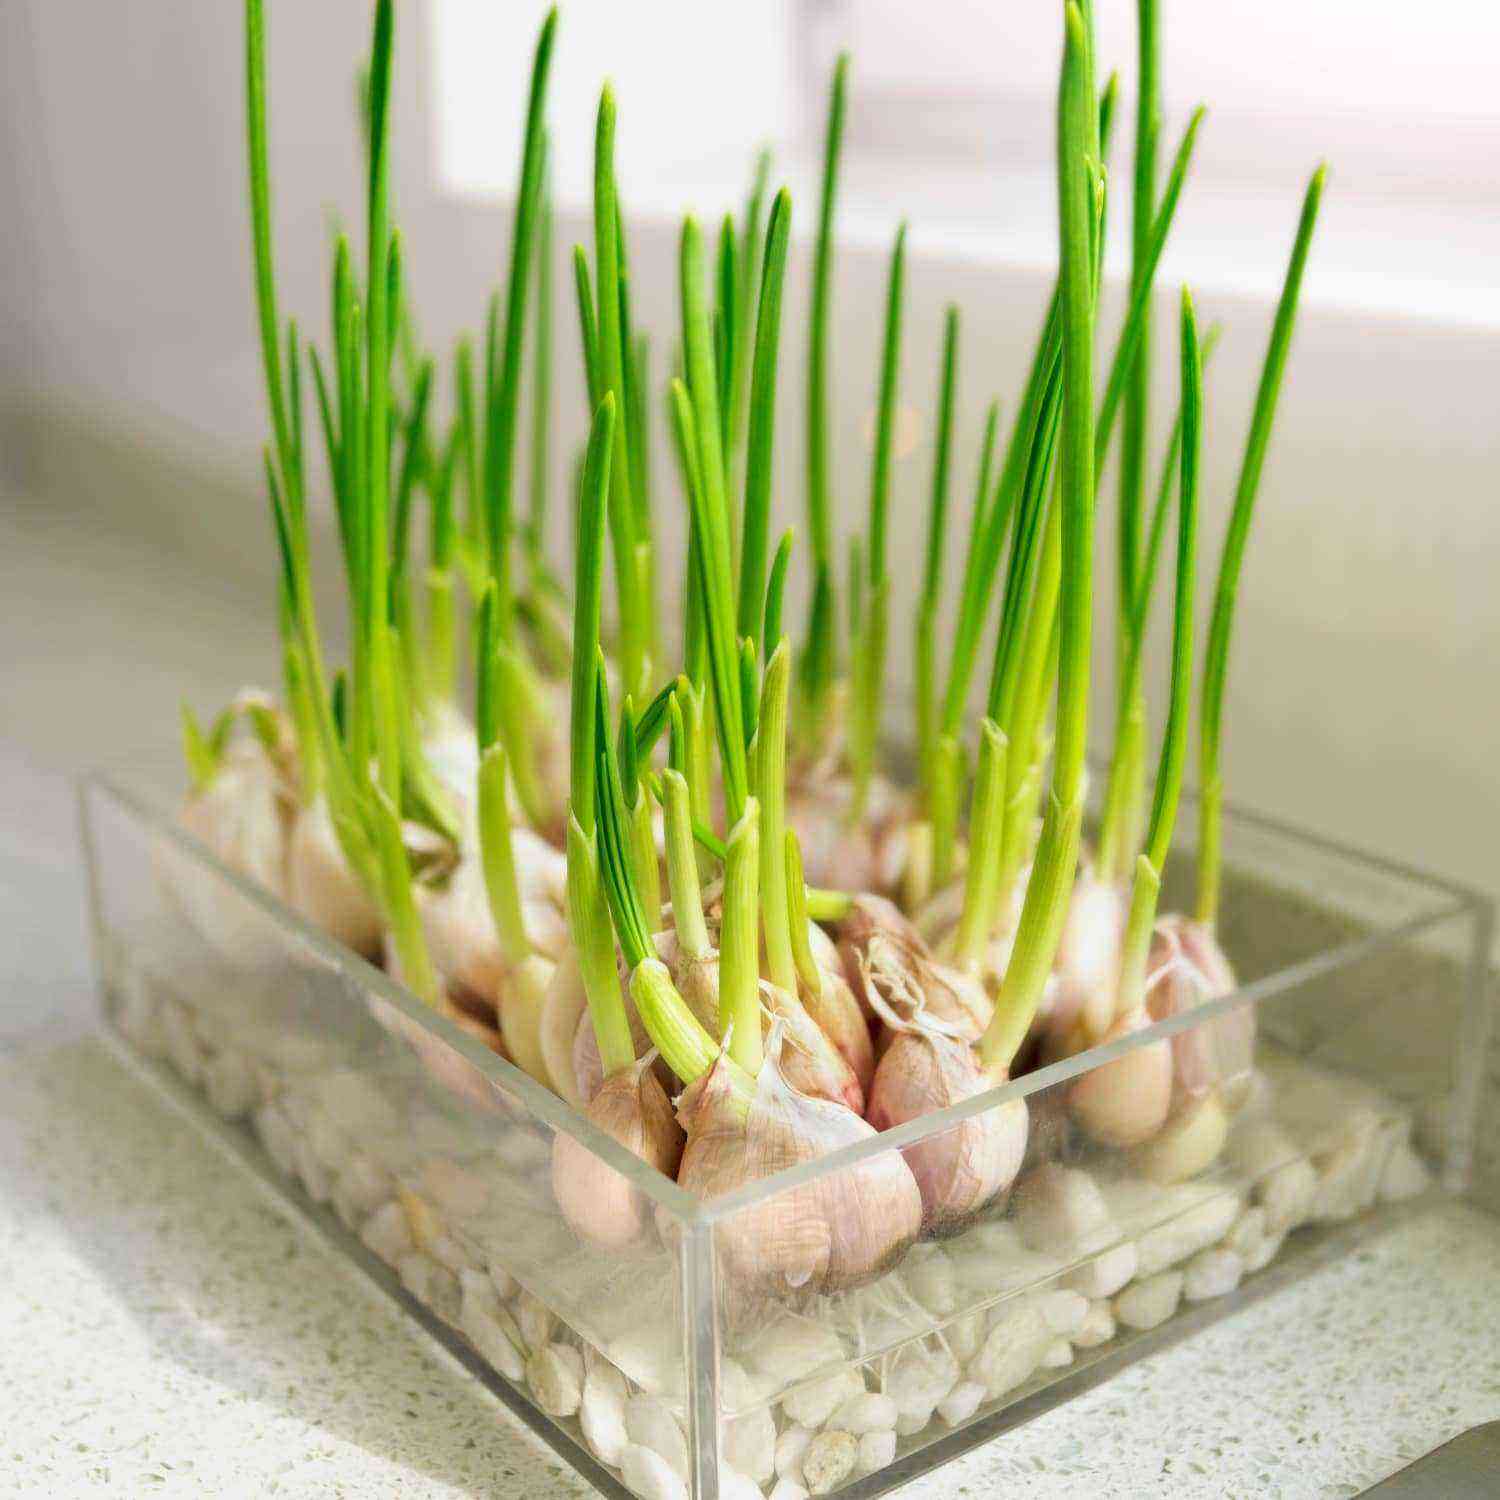 How to grow garlic?